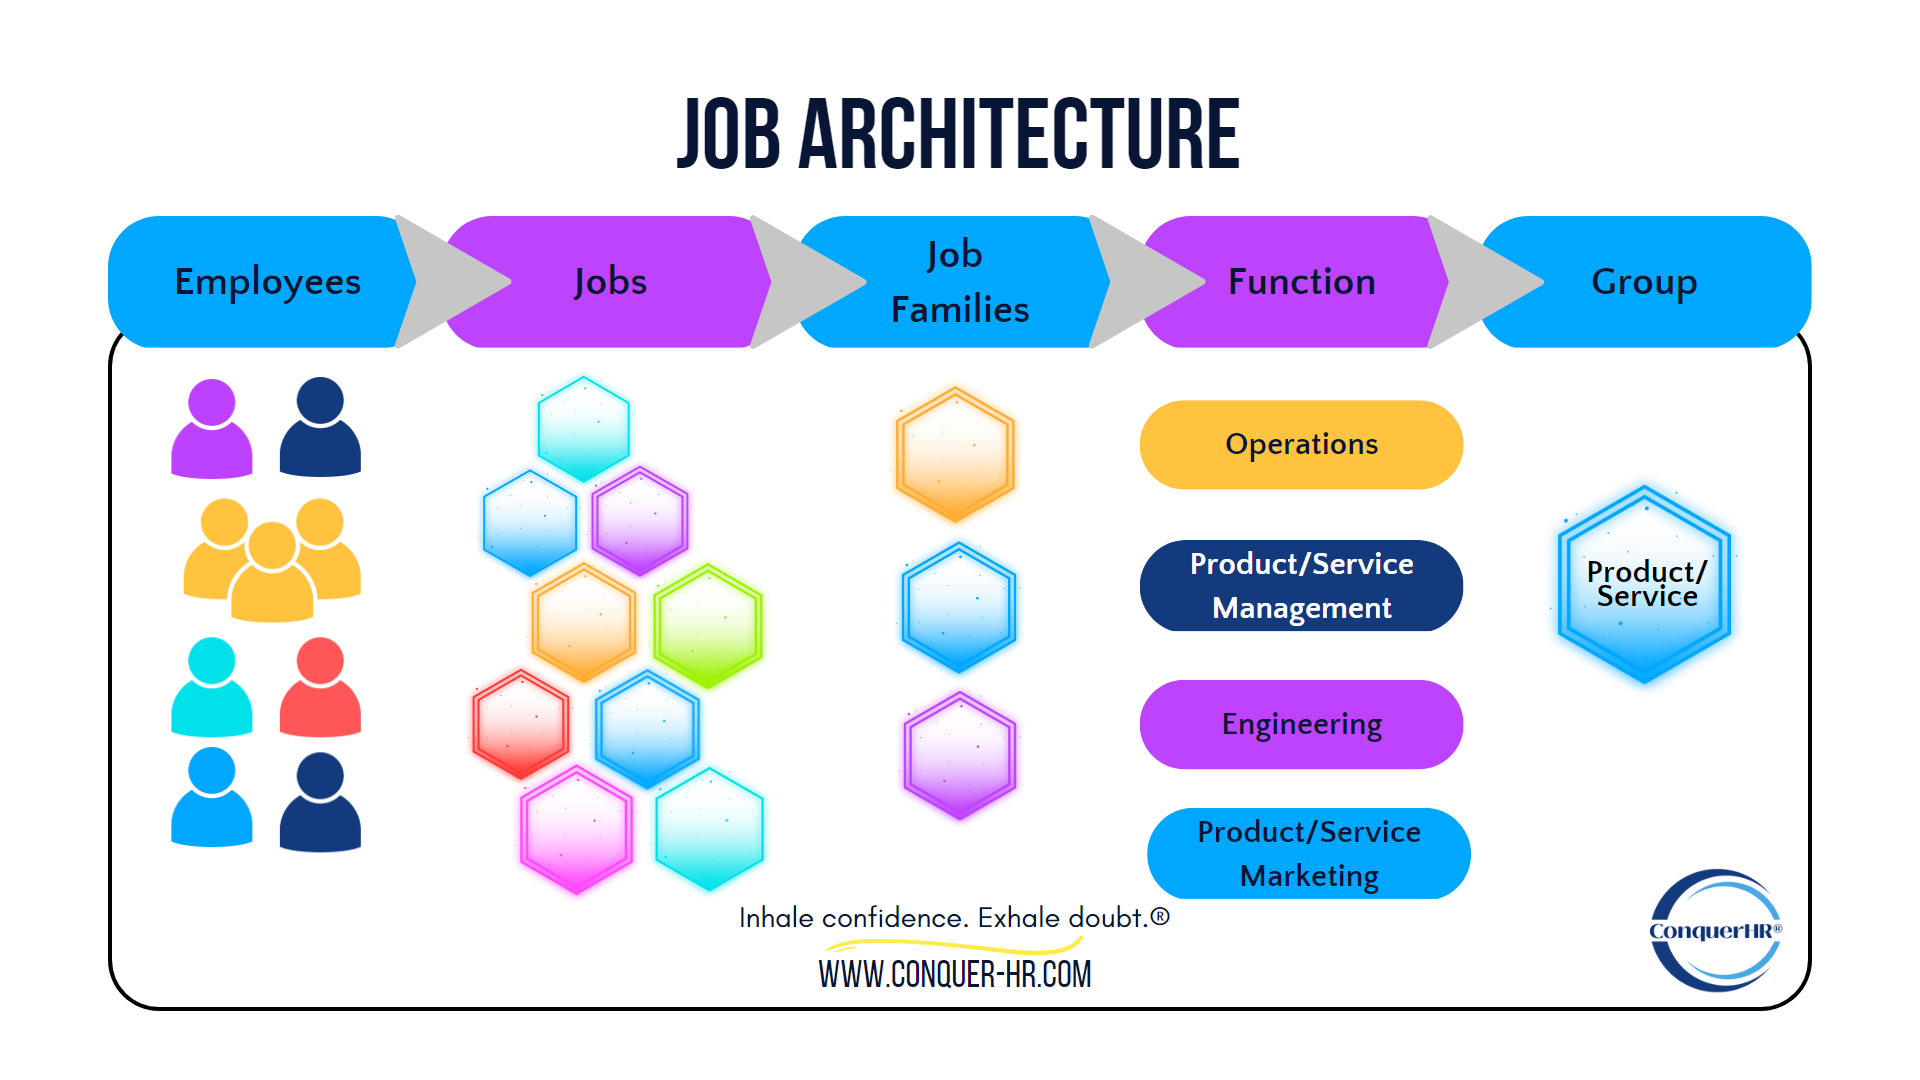 Job Architecture 2.13.2023 